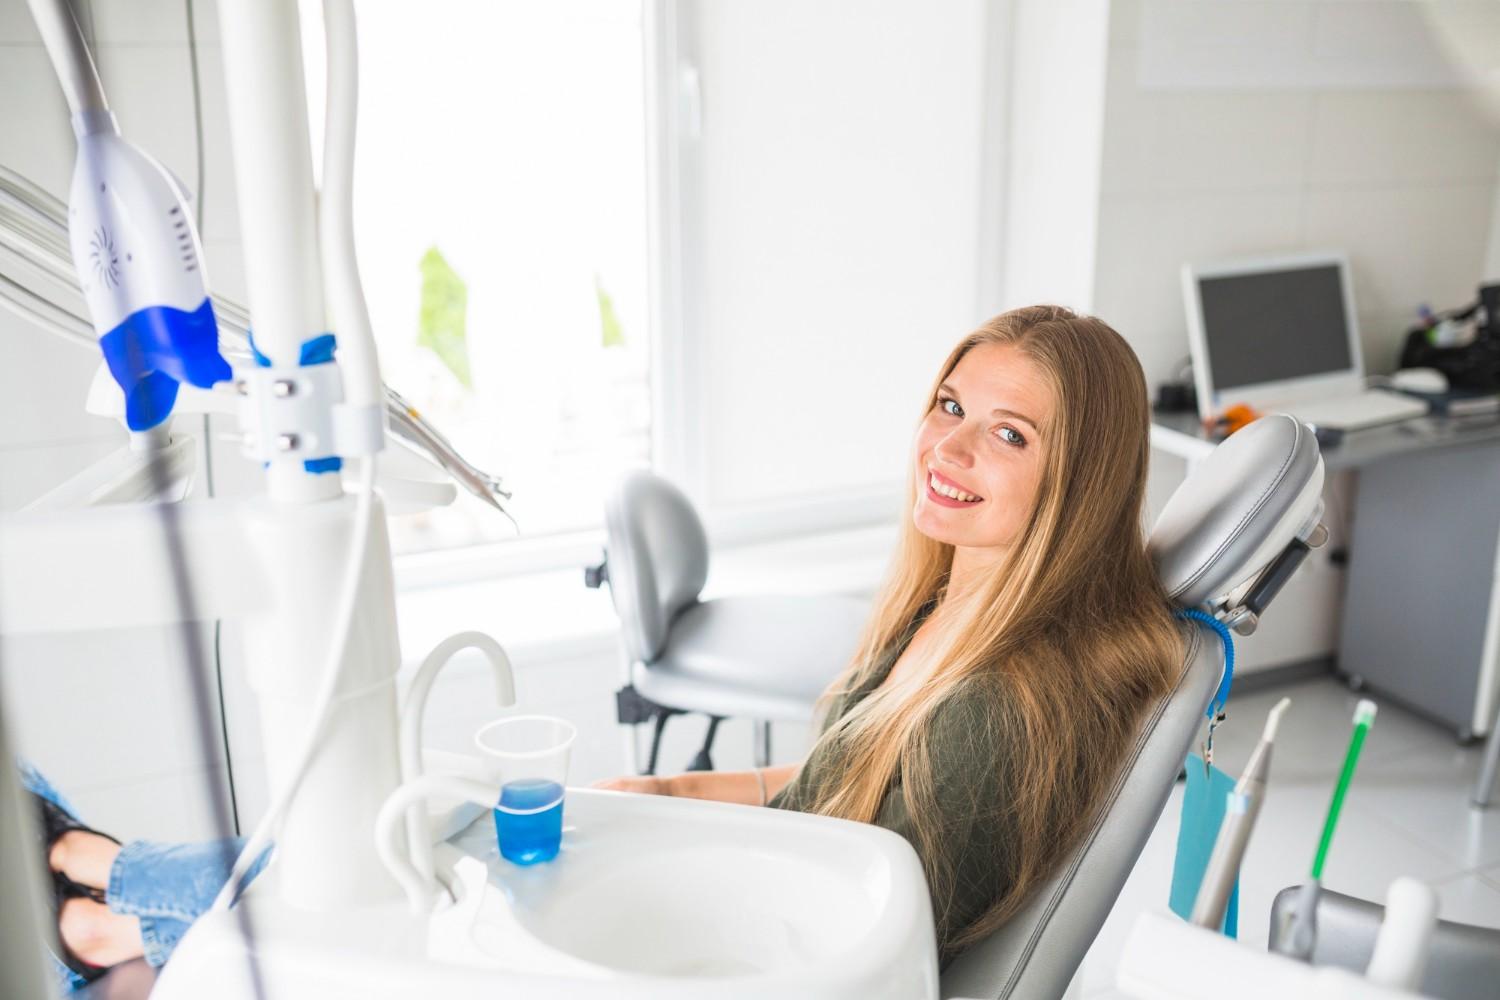 A woman sitting in a dental chair, receiving dental treatment from a dentist.